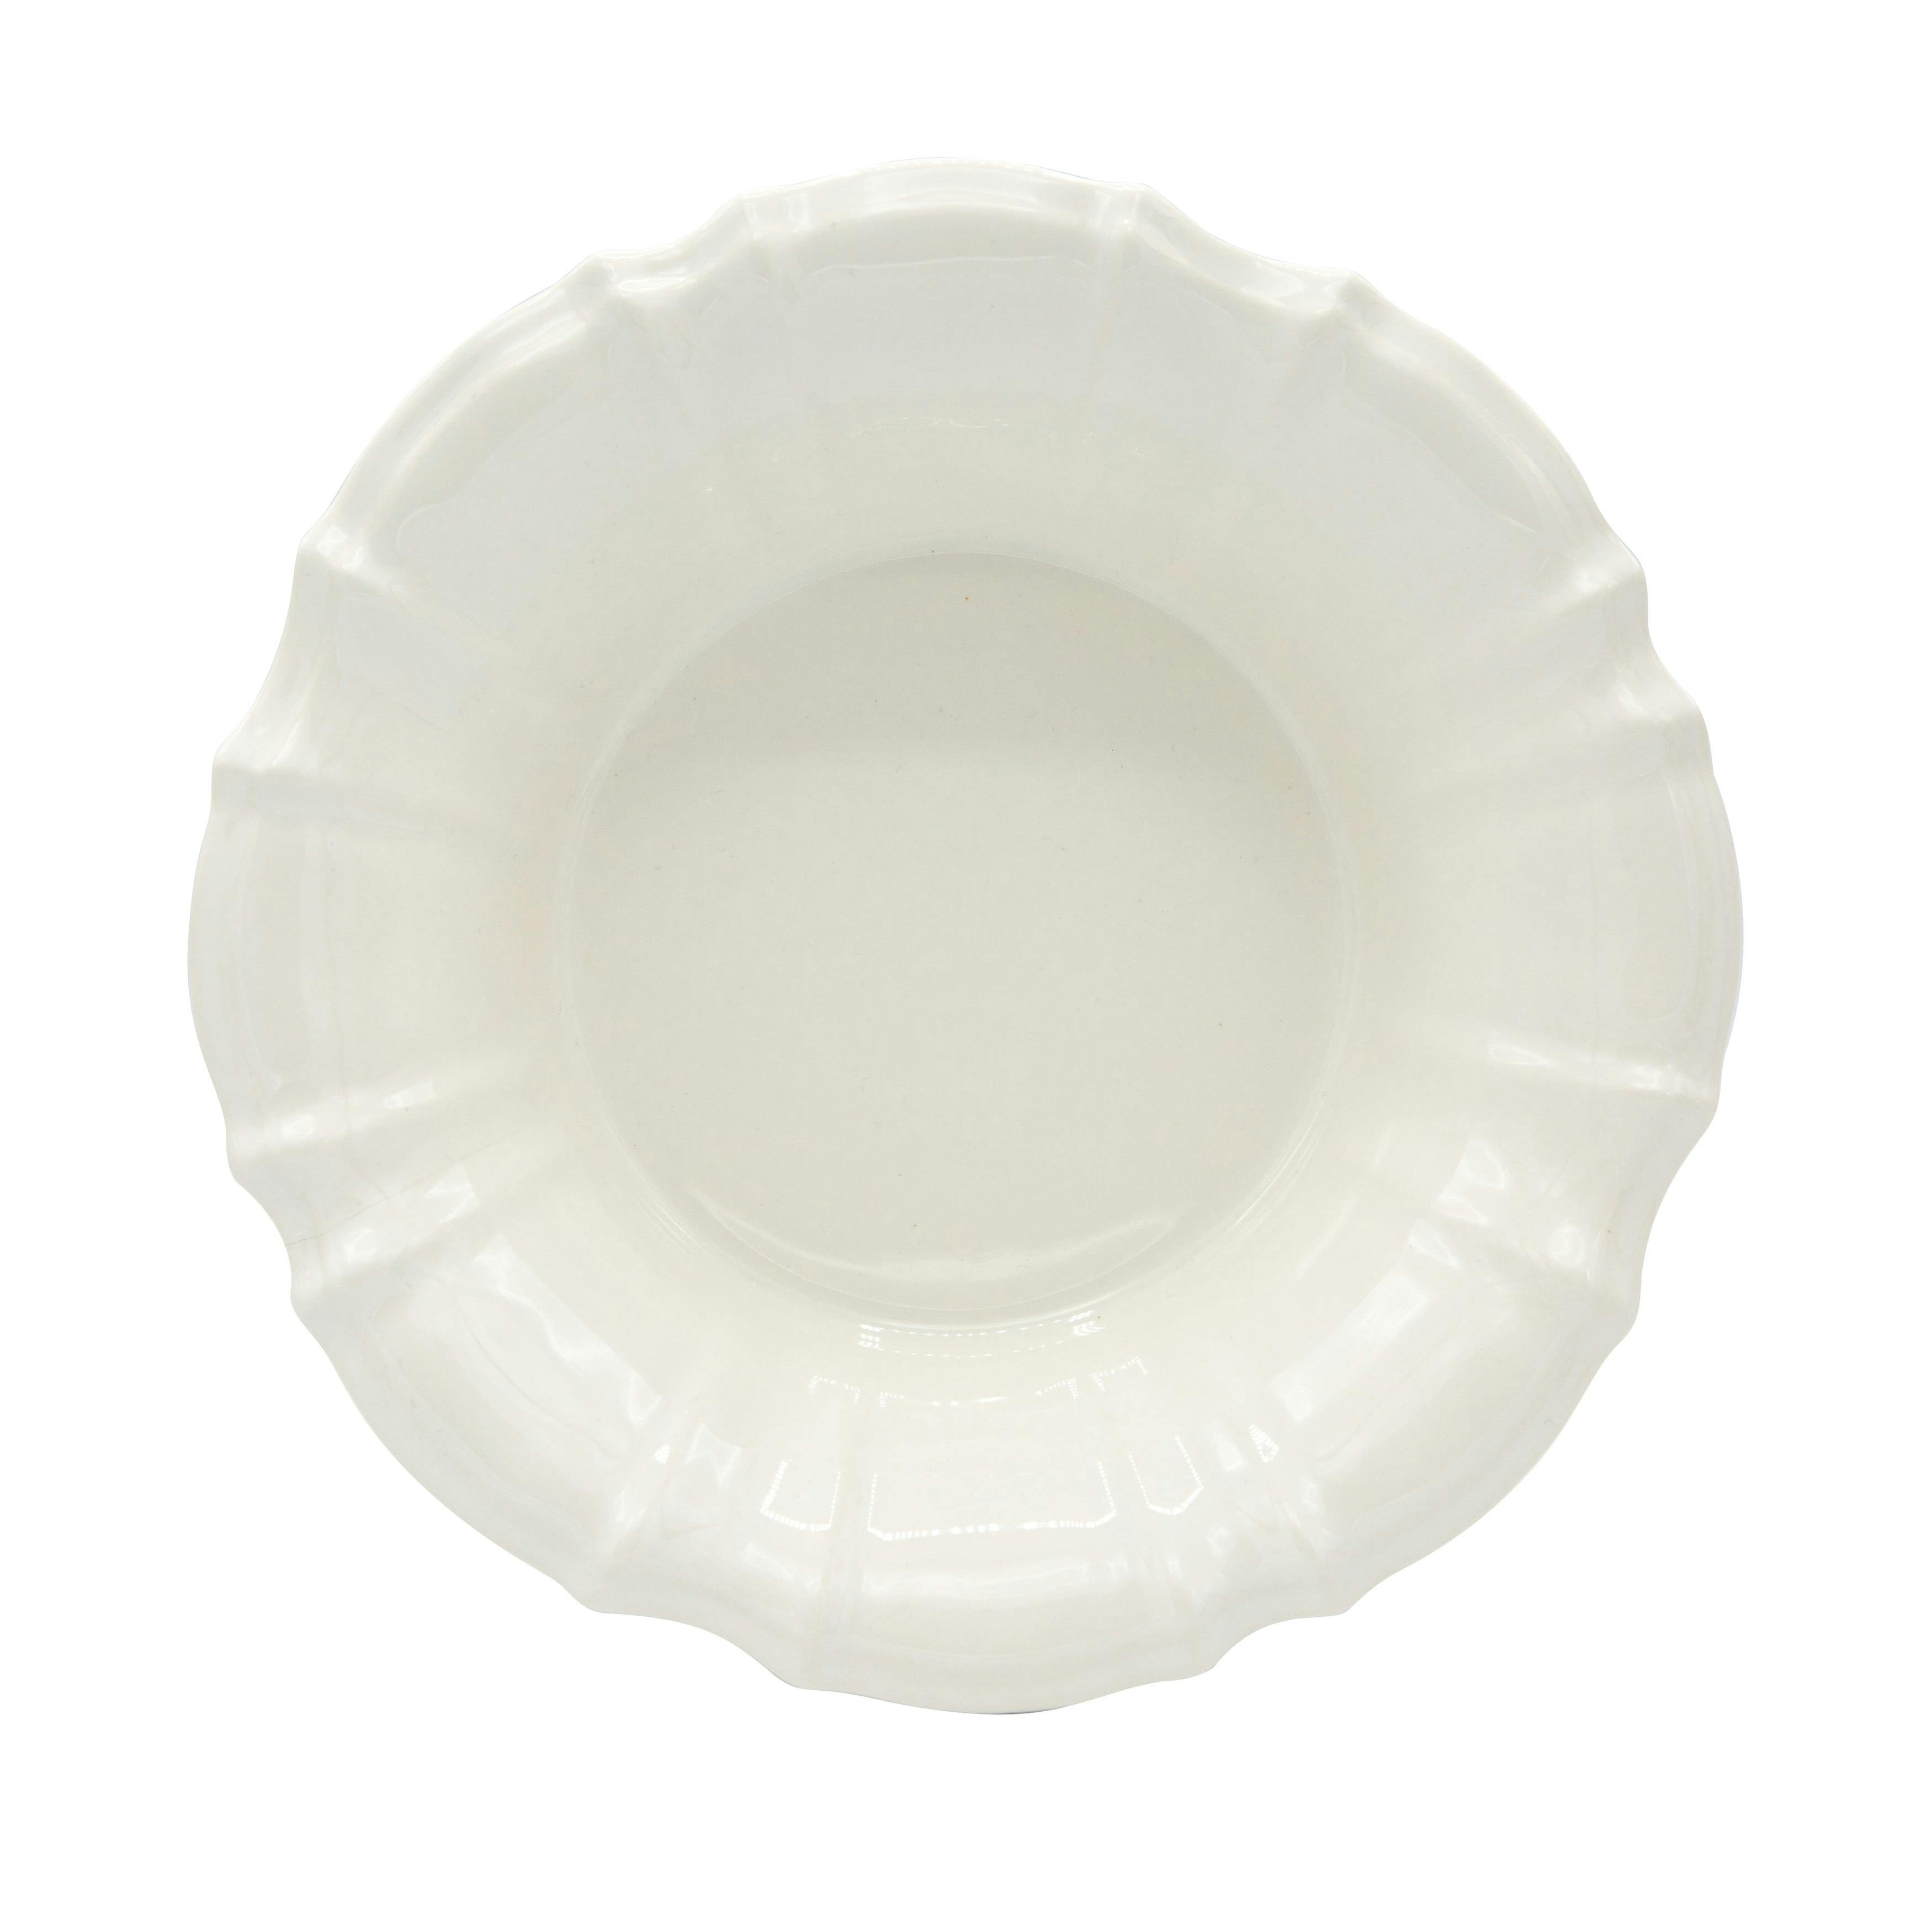 Elegant Chloe Ceramic Serving Bowl 9.84" White - Microwave & Dishwasher Safe